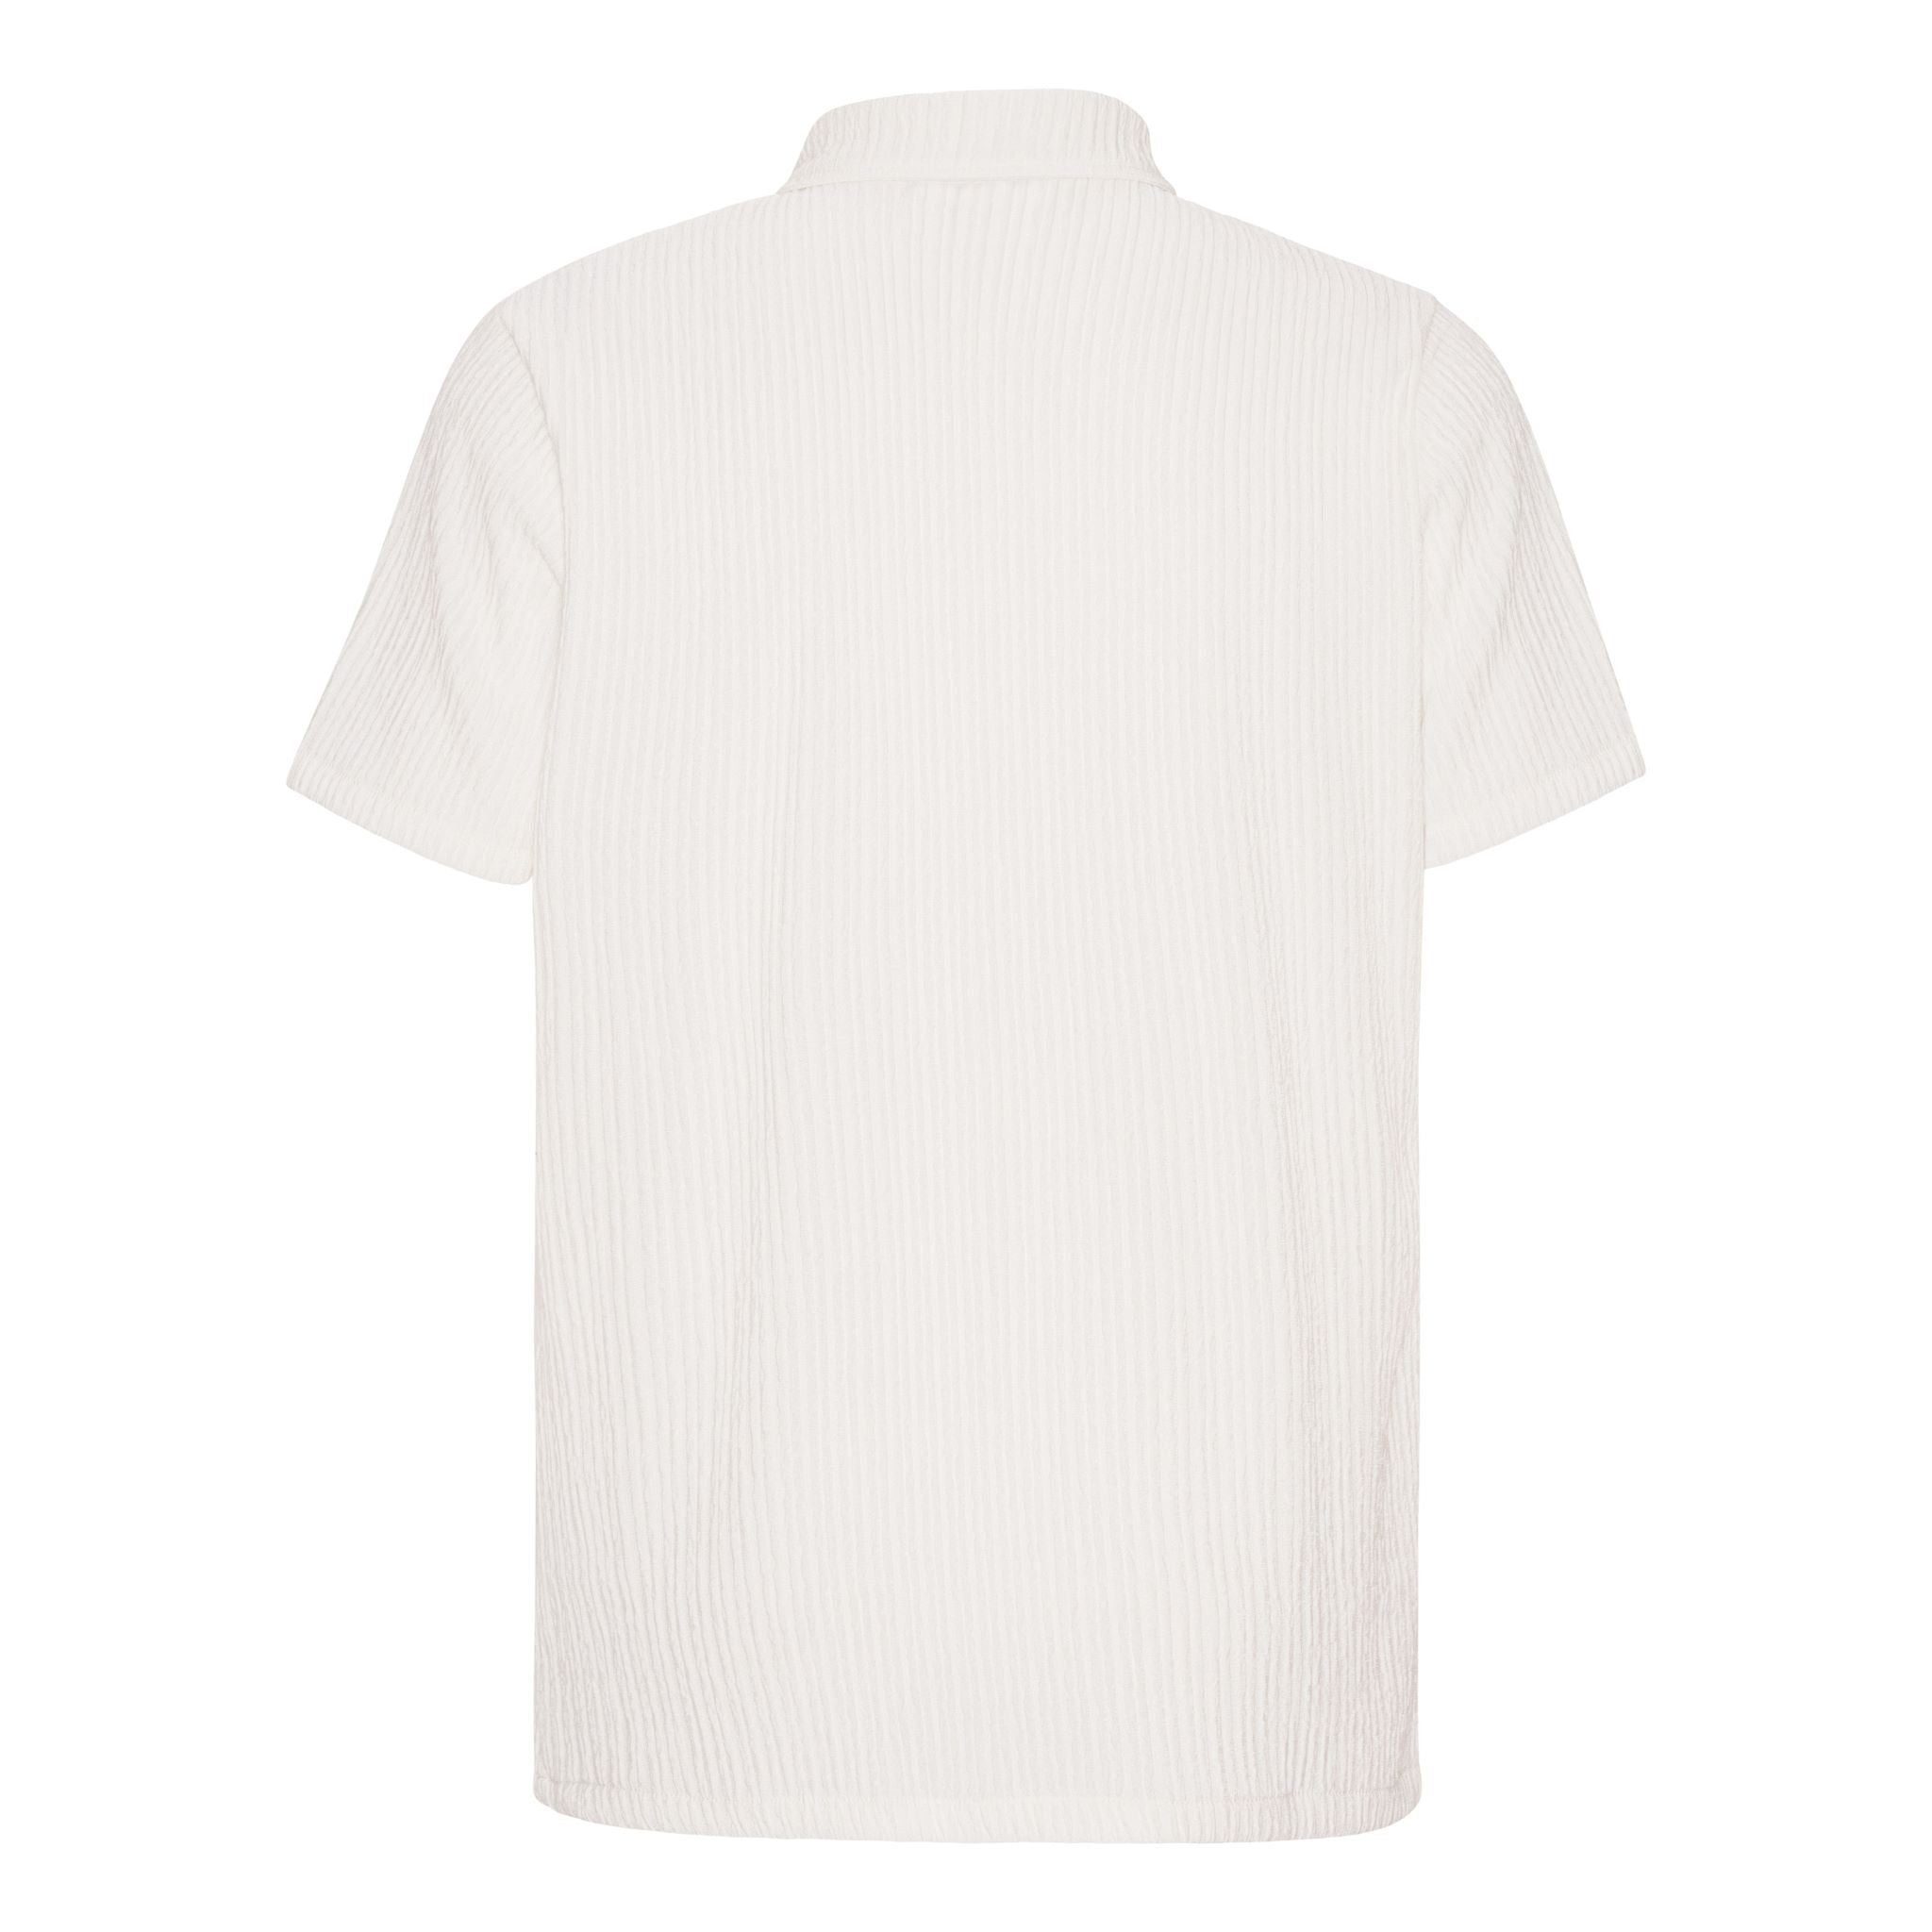 Offwhite crepeskjorte